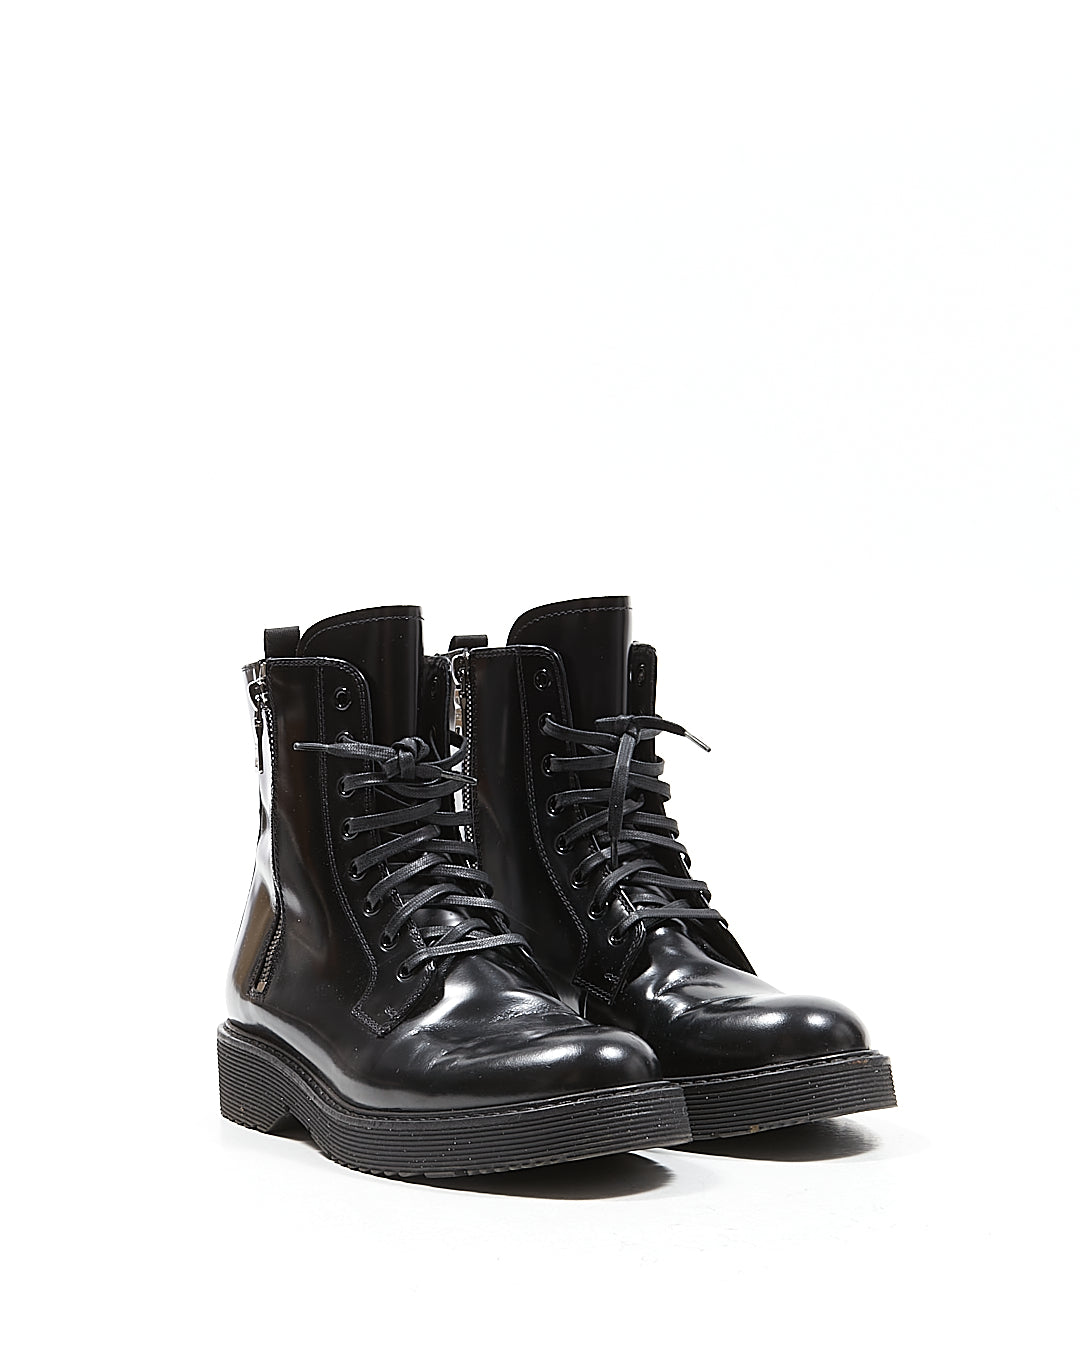 Prada Black Shiny Leather Combat Zip Lace Up Boots - 38.5